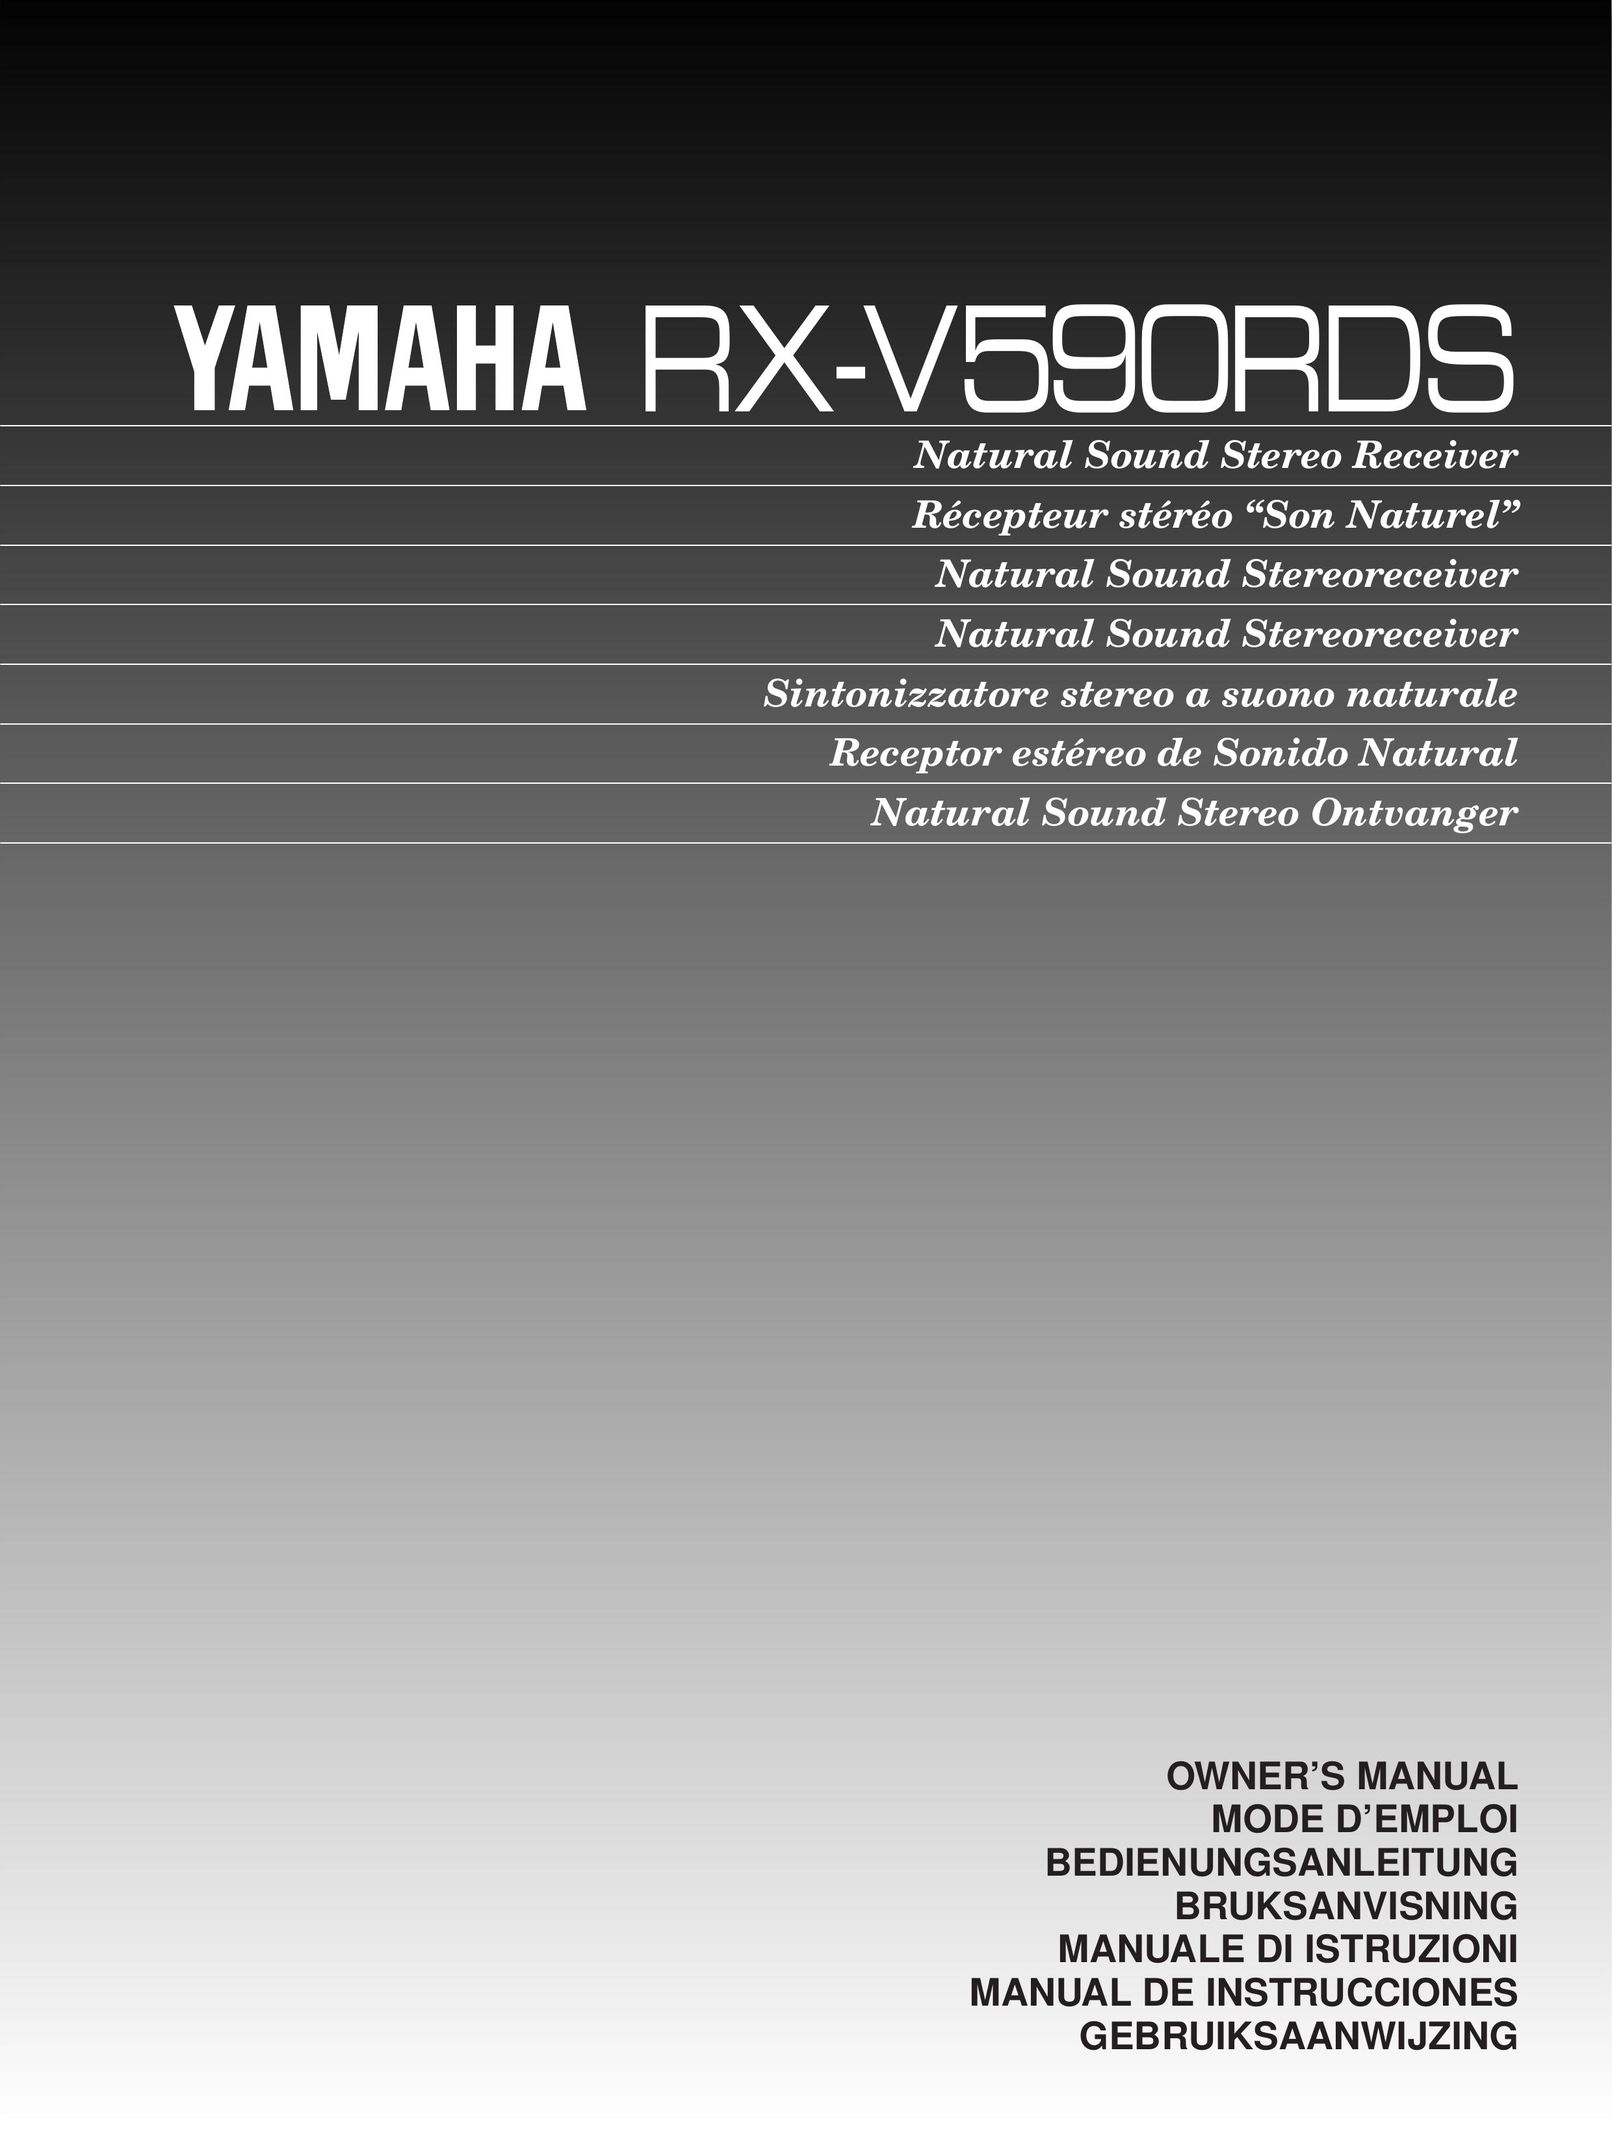 Yamaha RX-V590RDS Satellite TV System User Manual